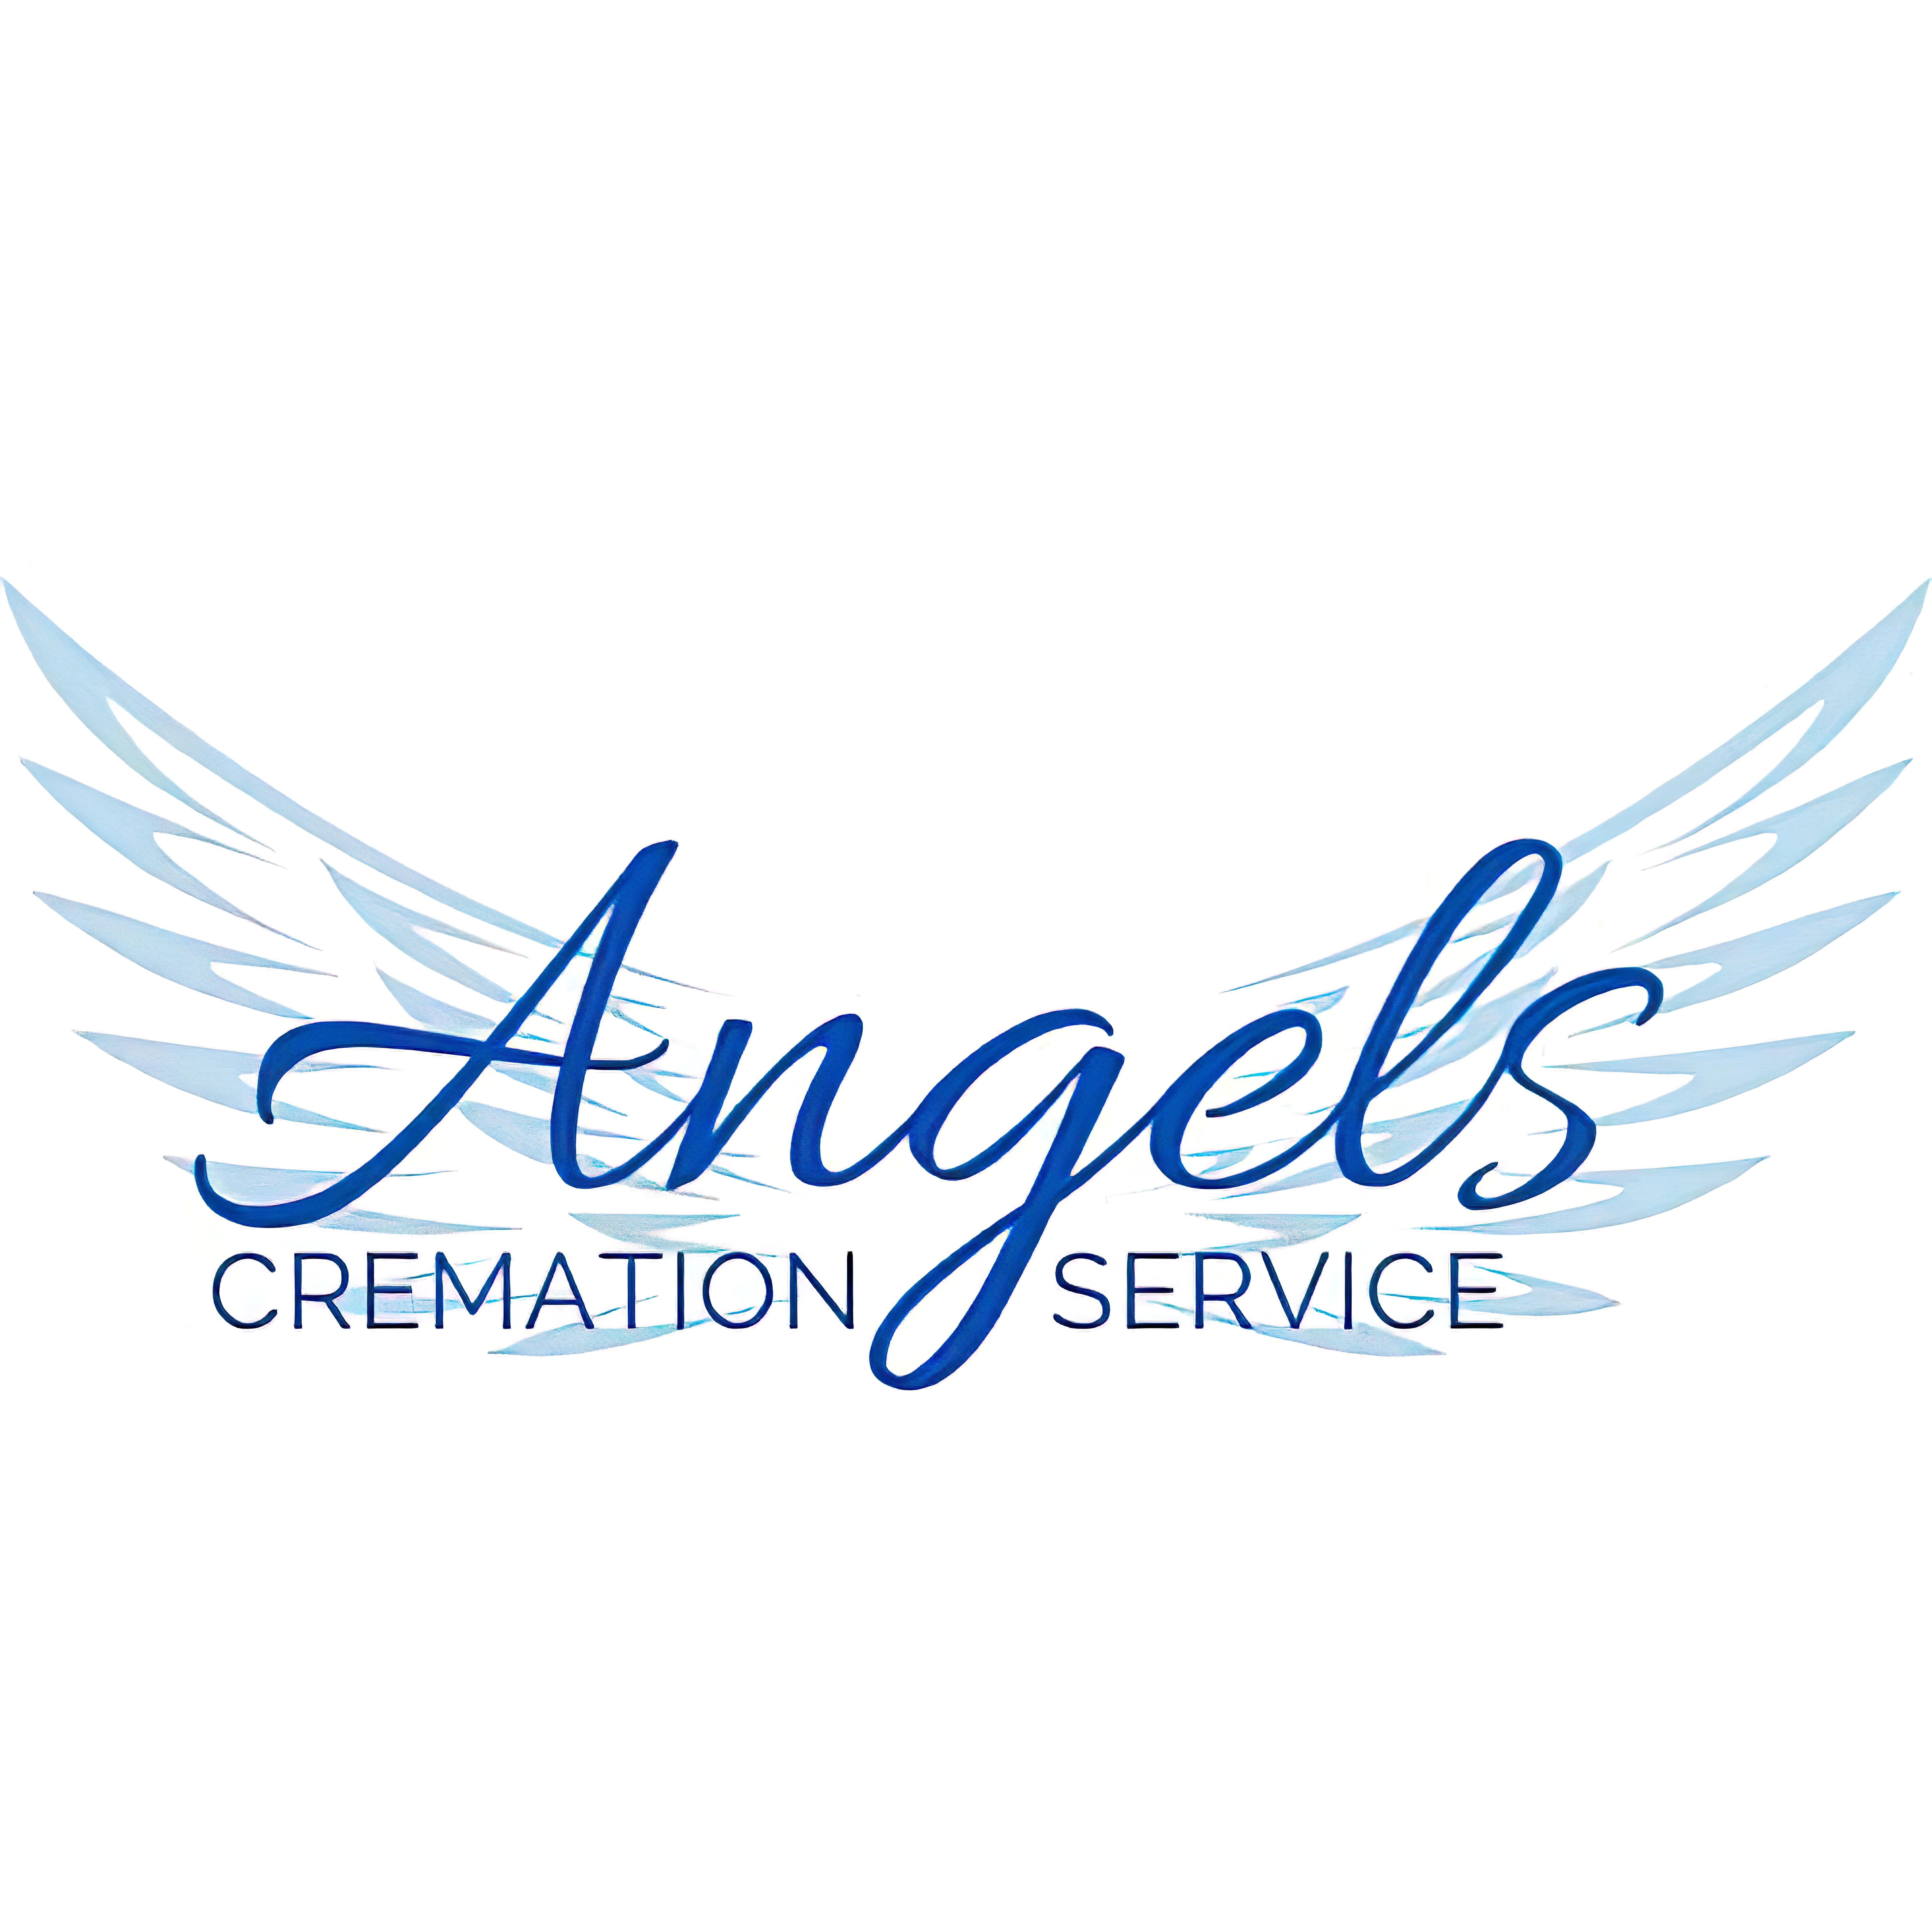 Angels Cremation Service